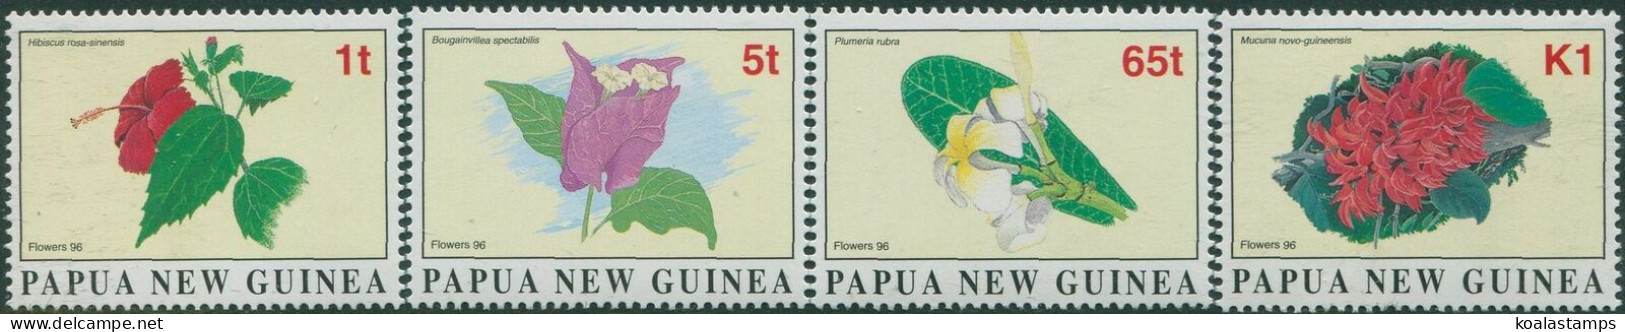 Papua New Guinea 1996 SG794-802 Flowers 4 Values MNH - Papua New Guinea